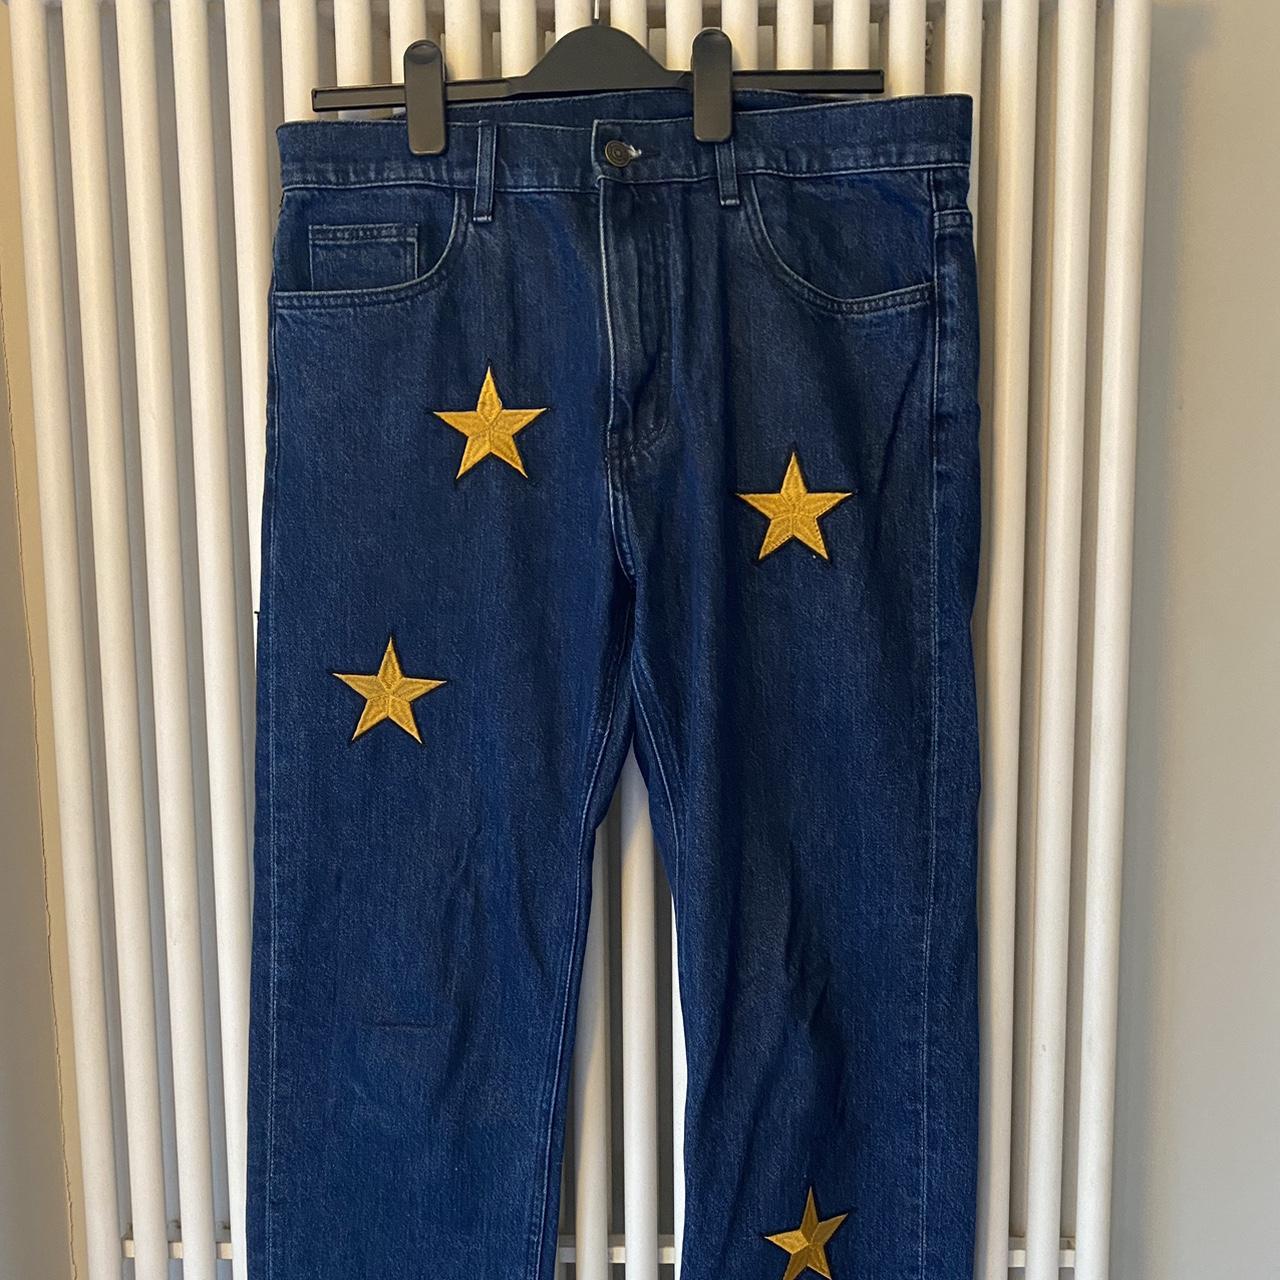 Unknown London star denim jeans blue size medium.